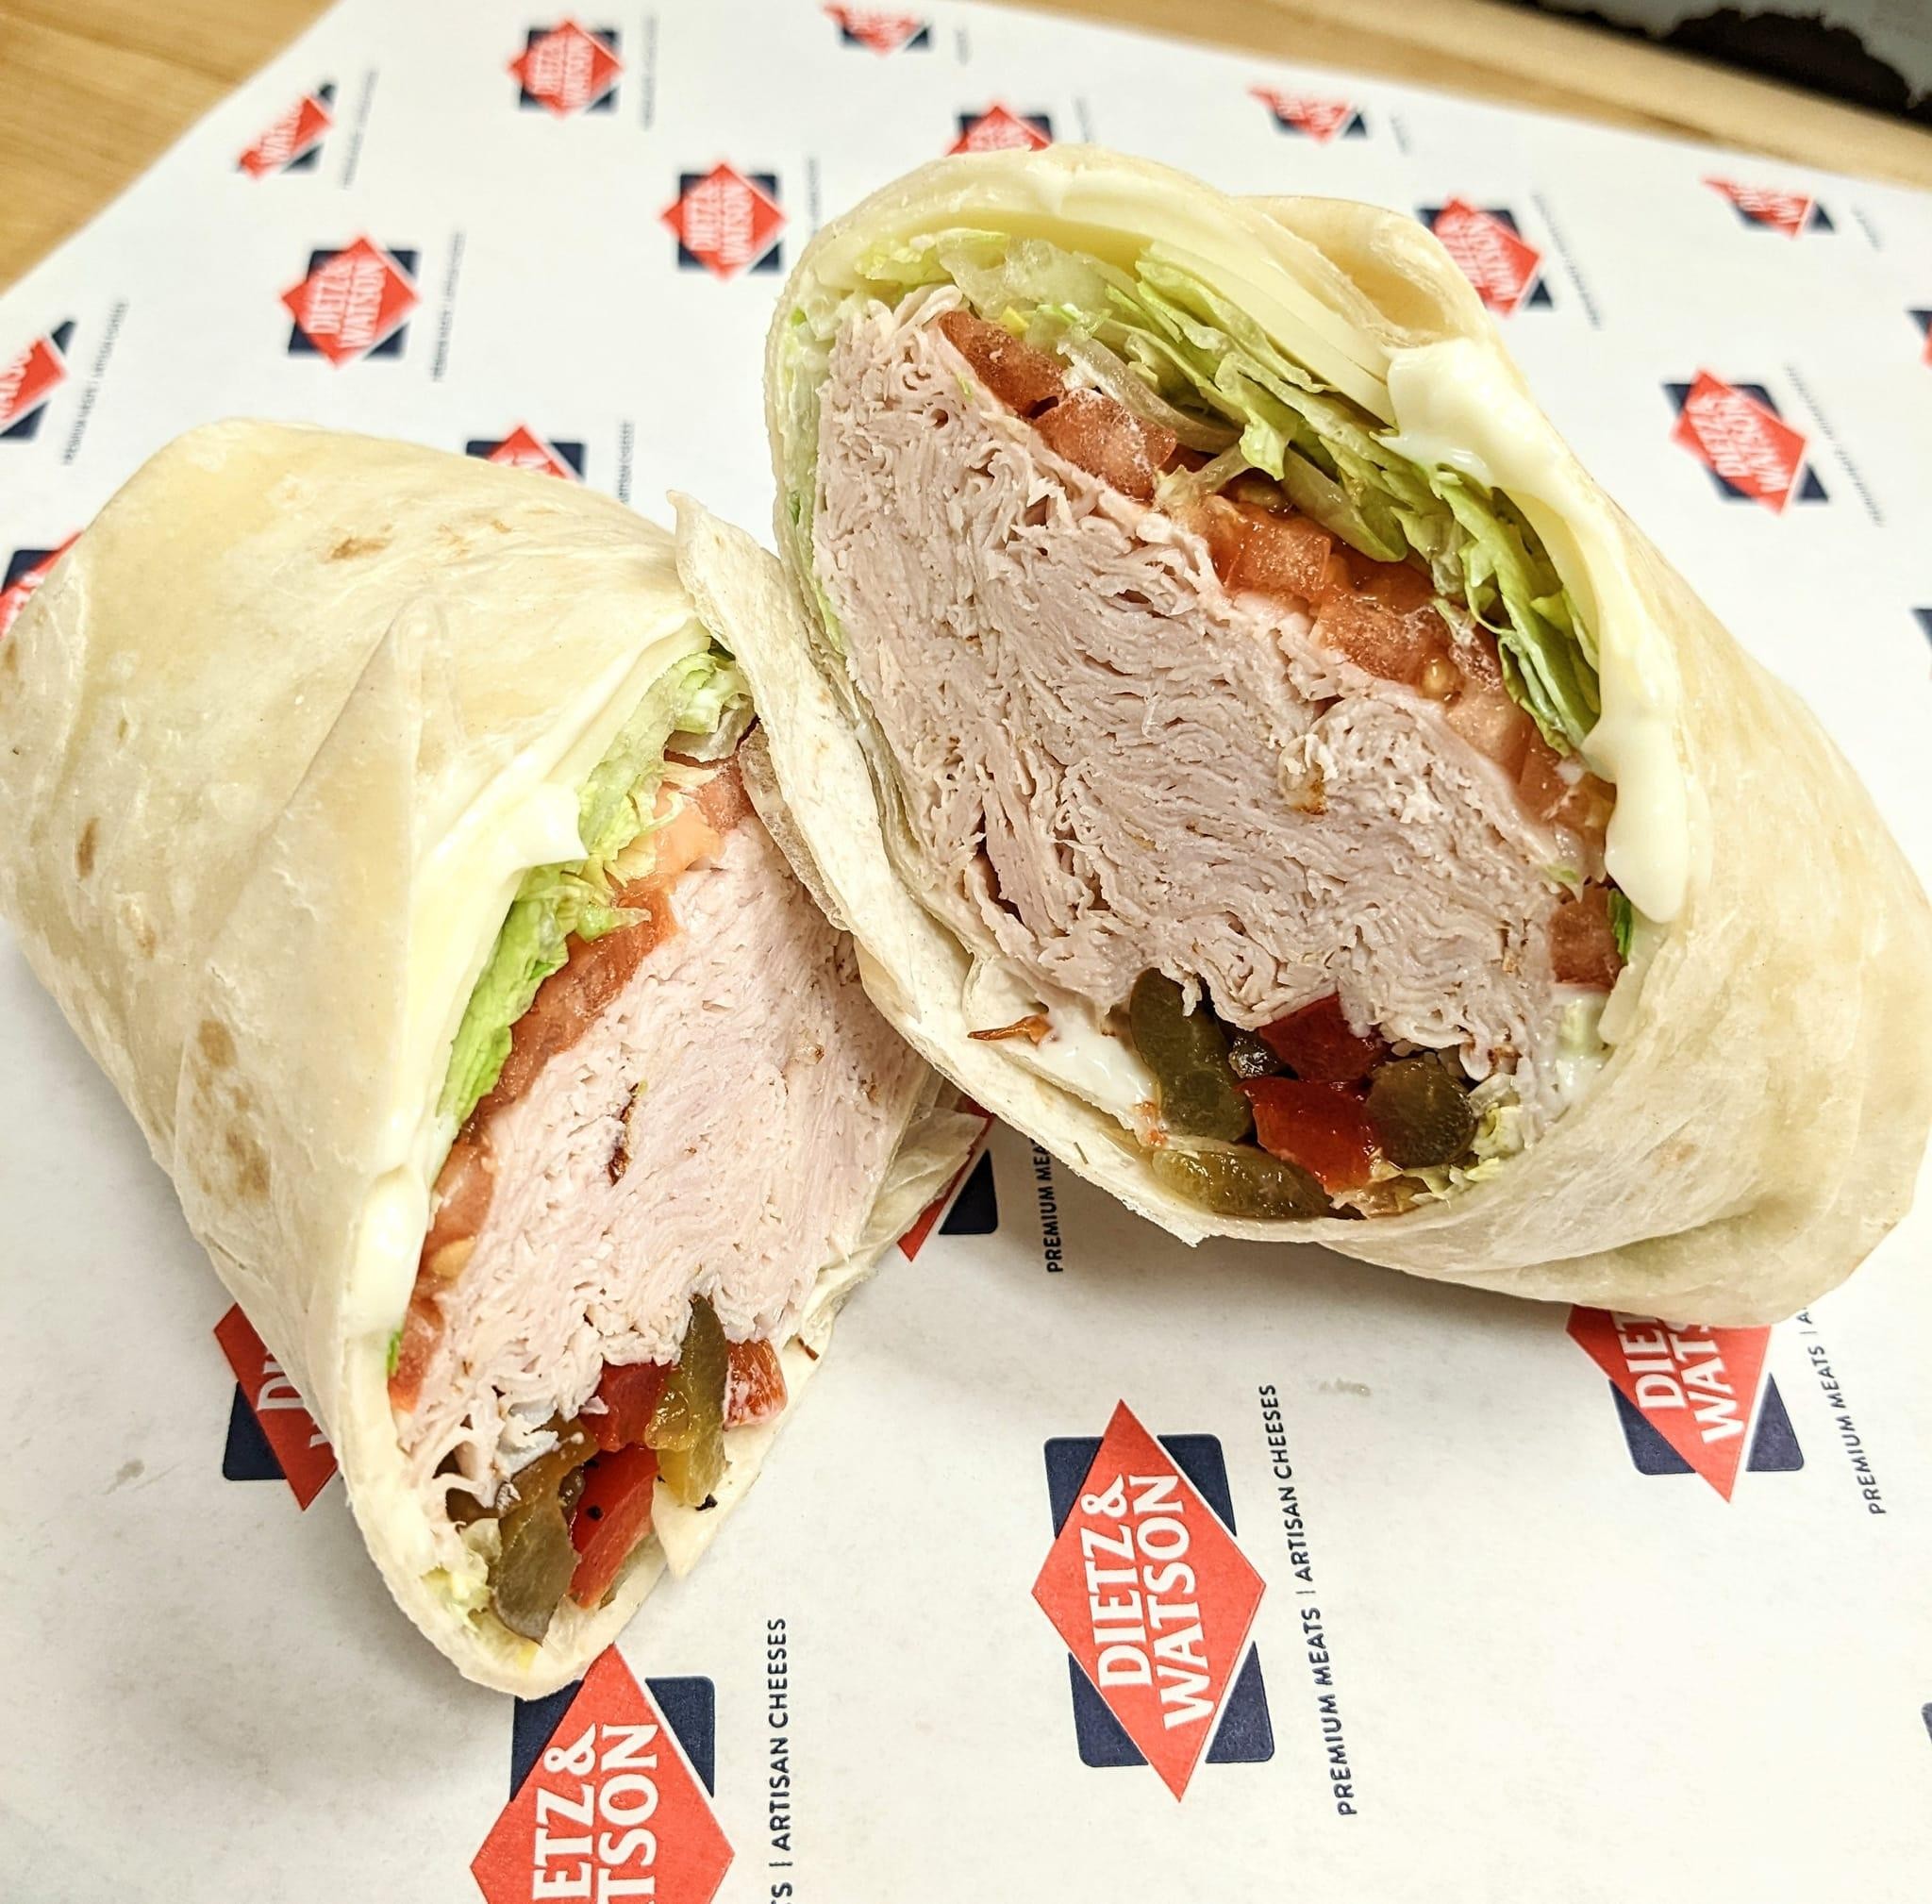 Turkey Sandwich